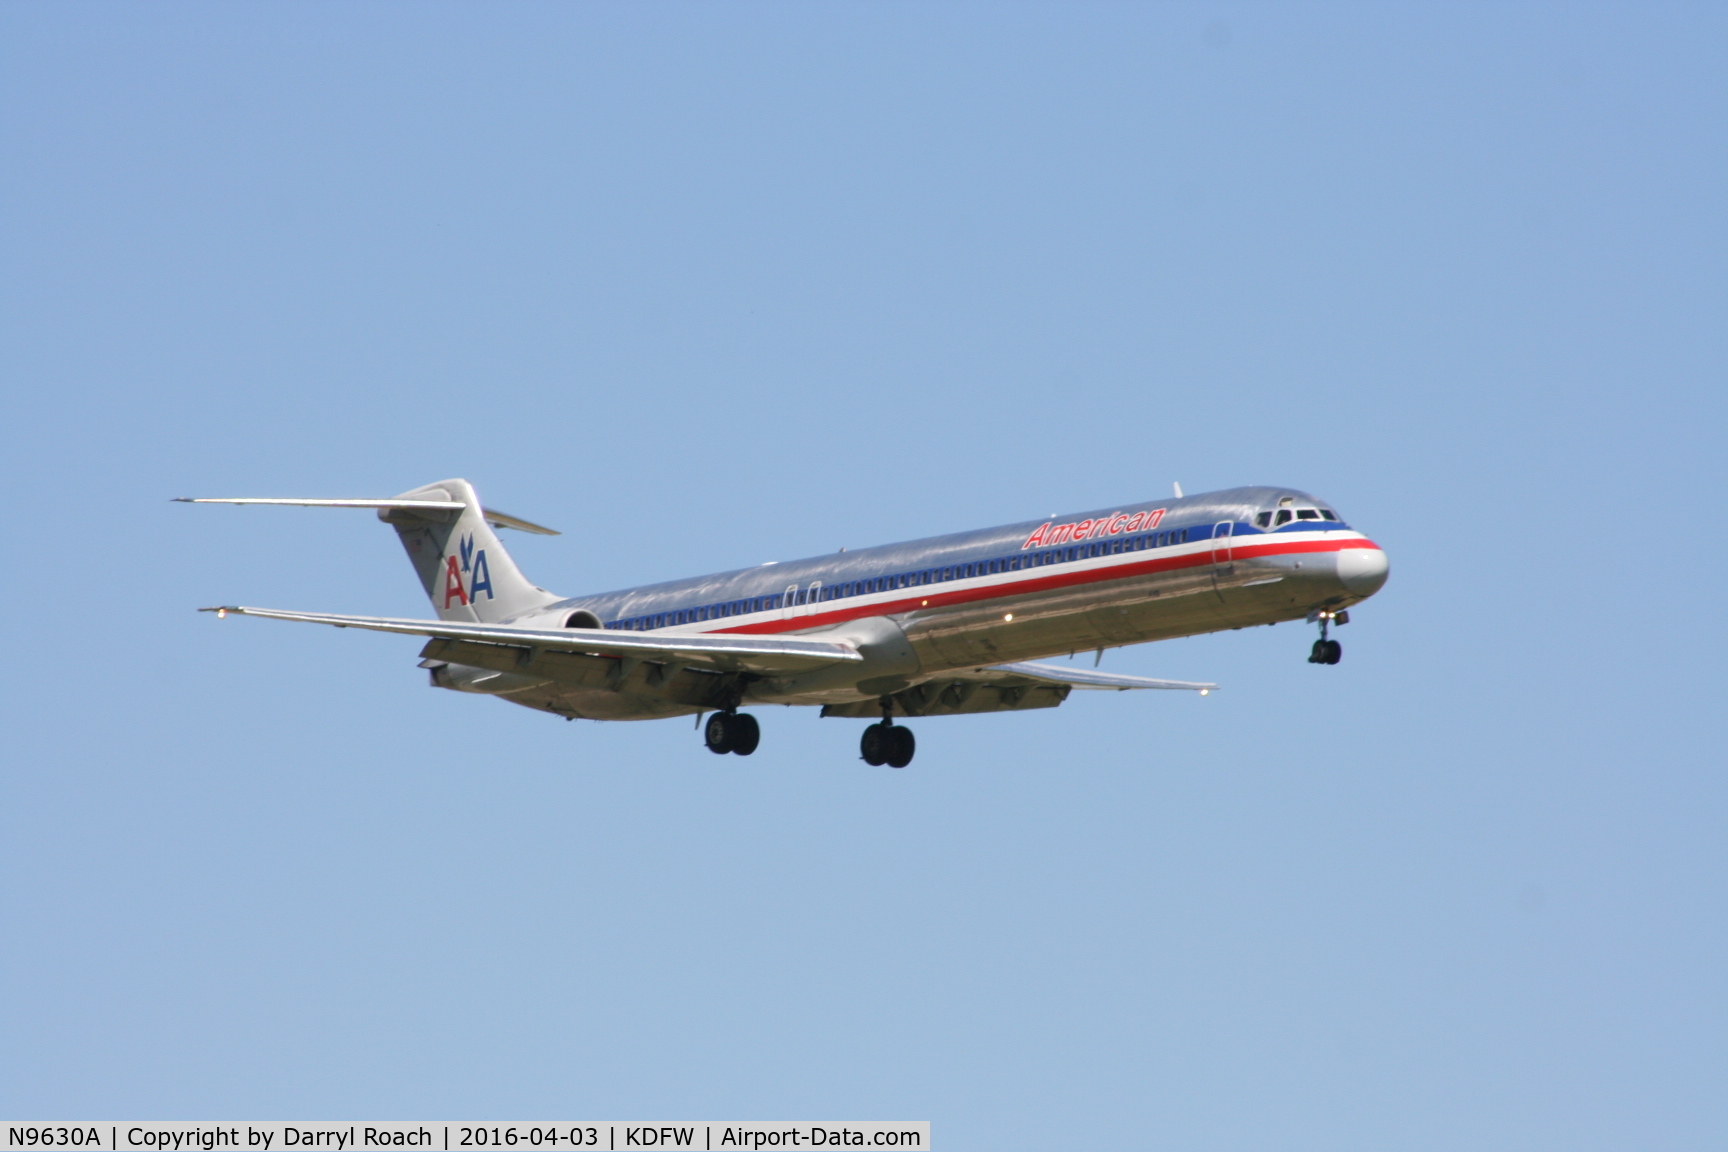 N9630A, 1997 McDonnell Douglas MD-83 (DC-9-83) C/N 53561, AA's 4XS short final 18R.